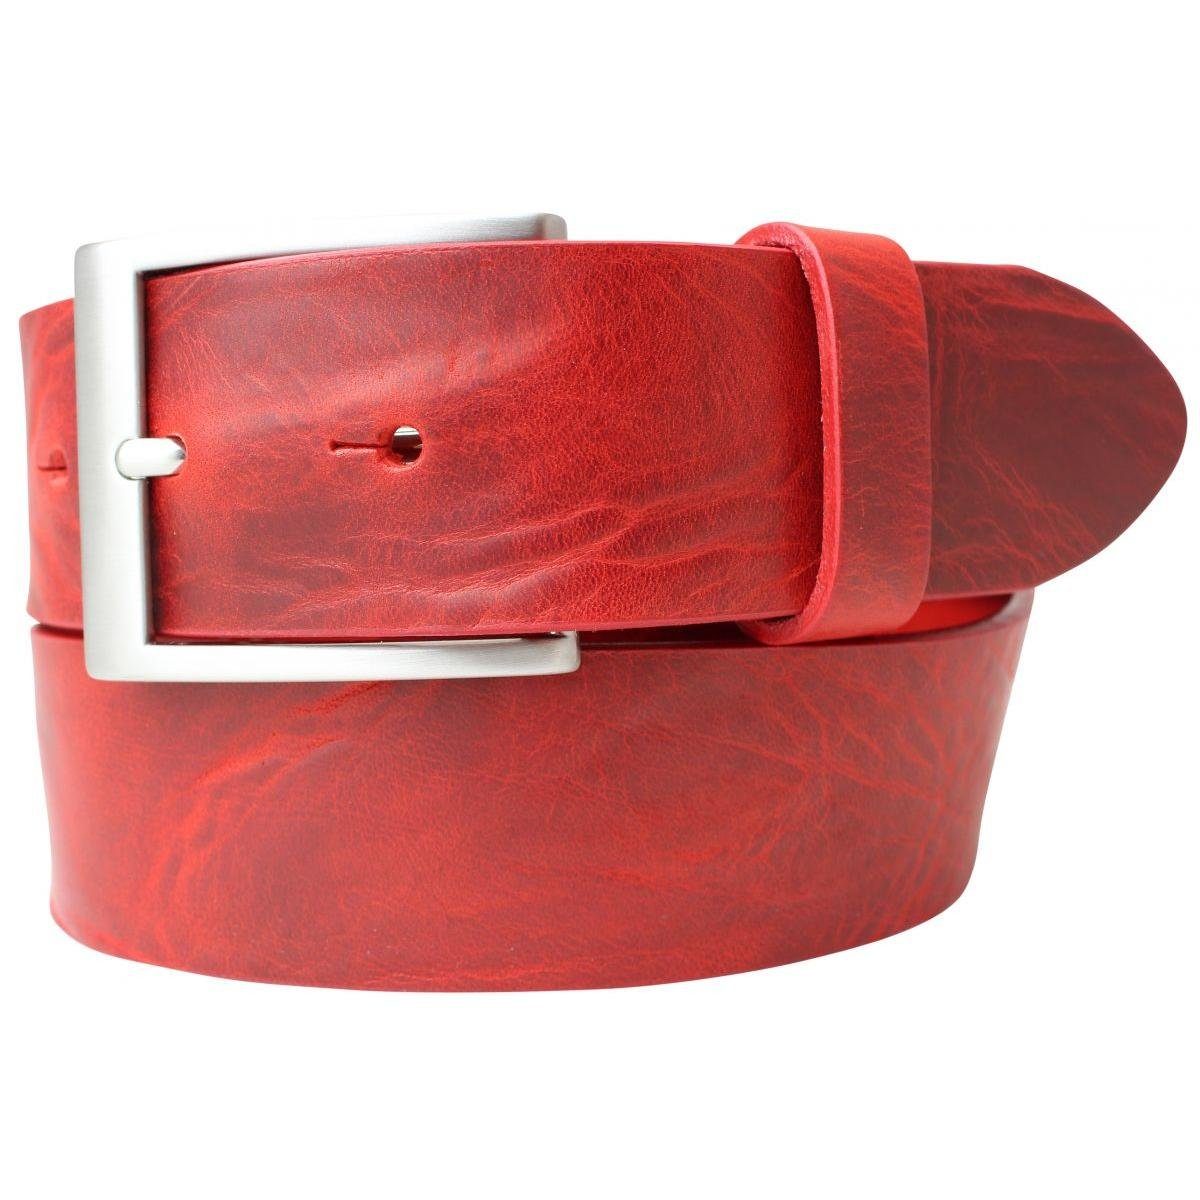 Vollrindleder BELTINGER Used-Look Ledergürtel Leder-Gürtel - 4 für aus cm Rot, Silber Jeans-Gürtel Herre